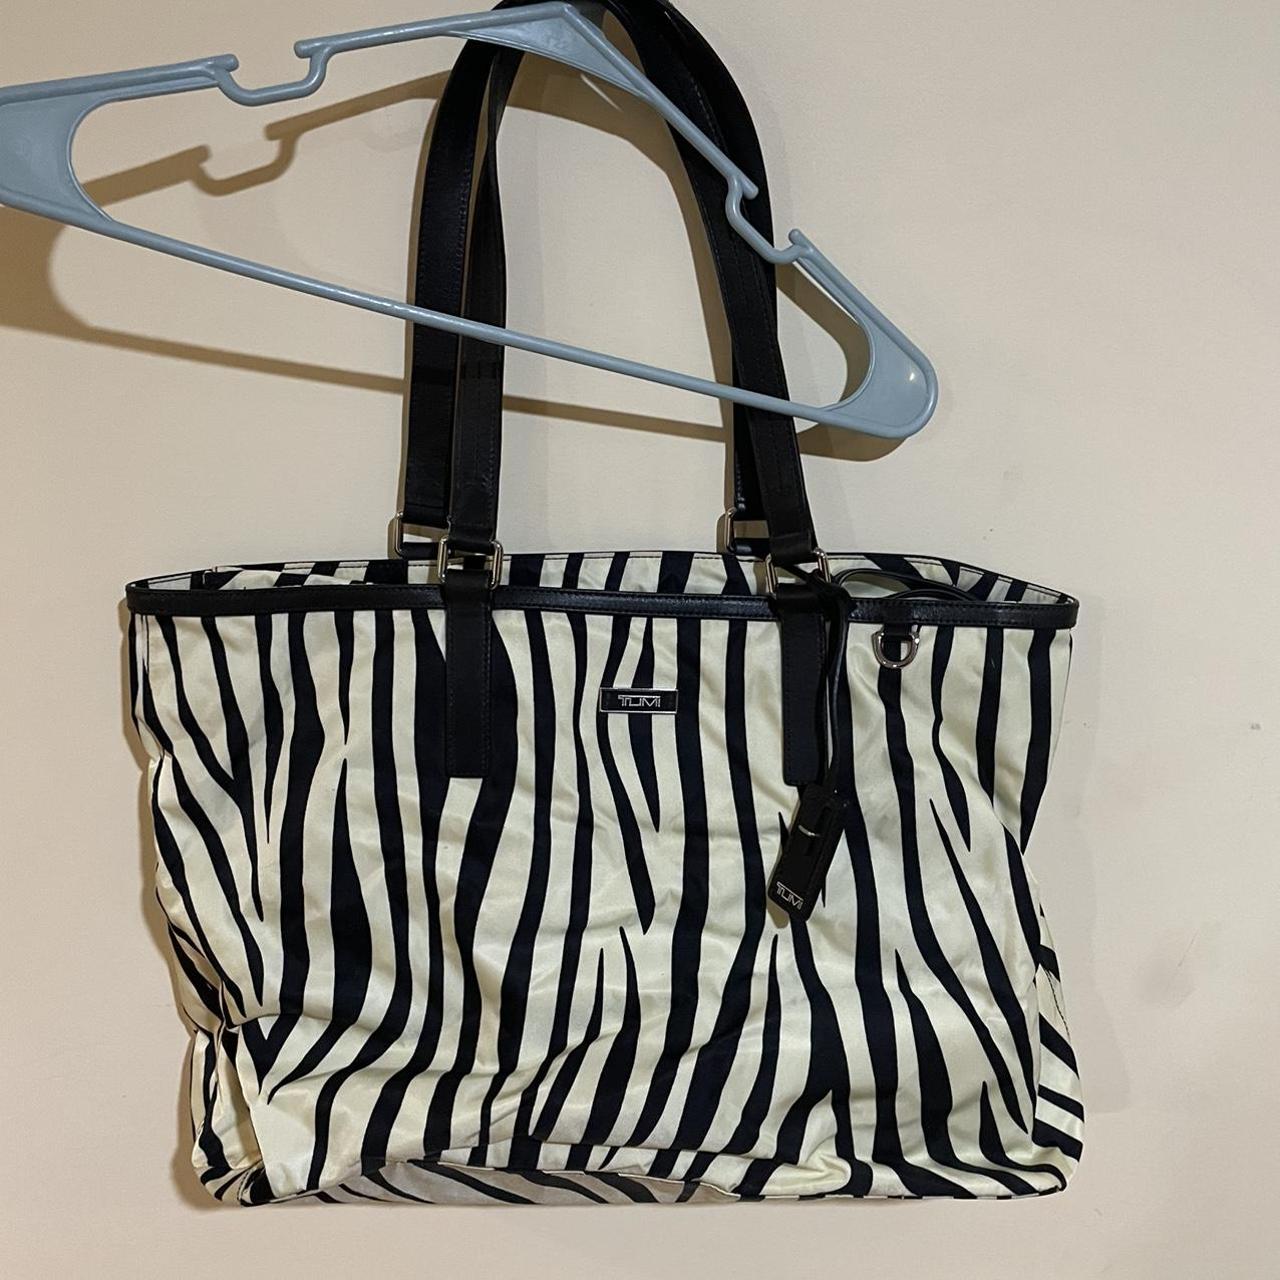 Product Image 1 - zebra print tumi purse nice